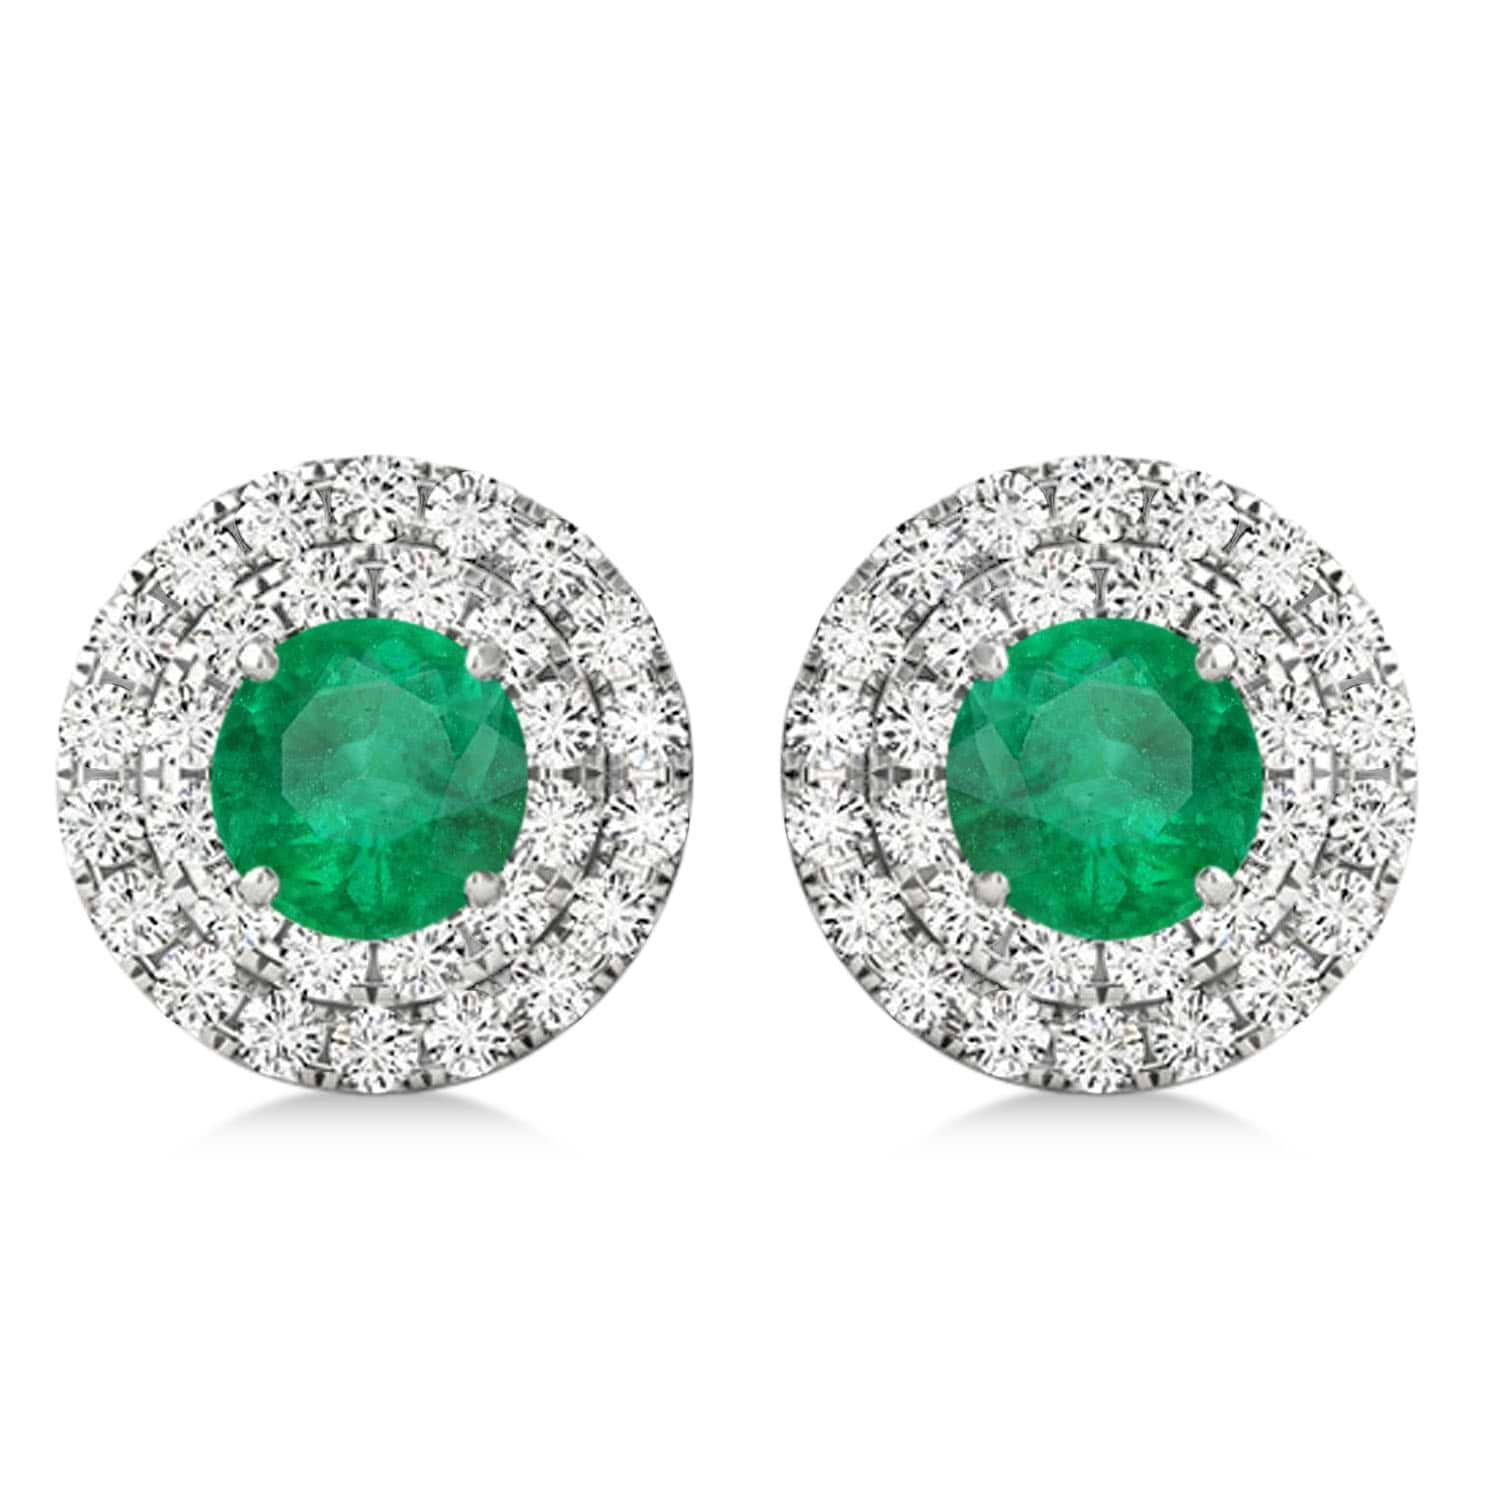 Round Double Halo Diamond & Emerald Earrings 14k White Gold 1.41ct